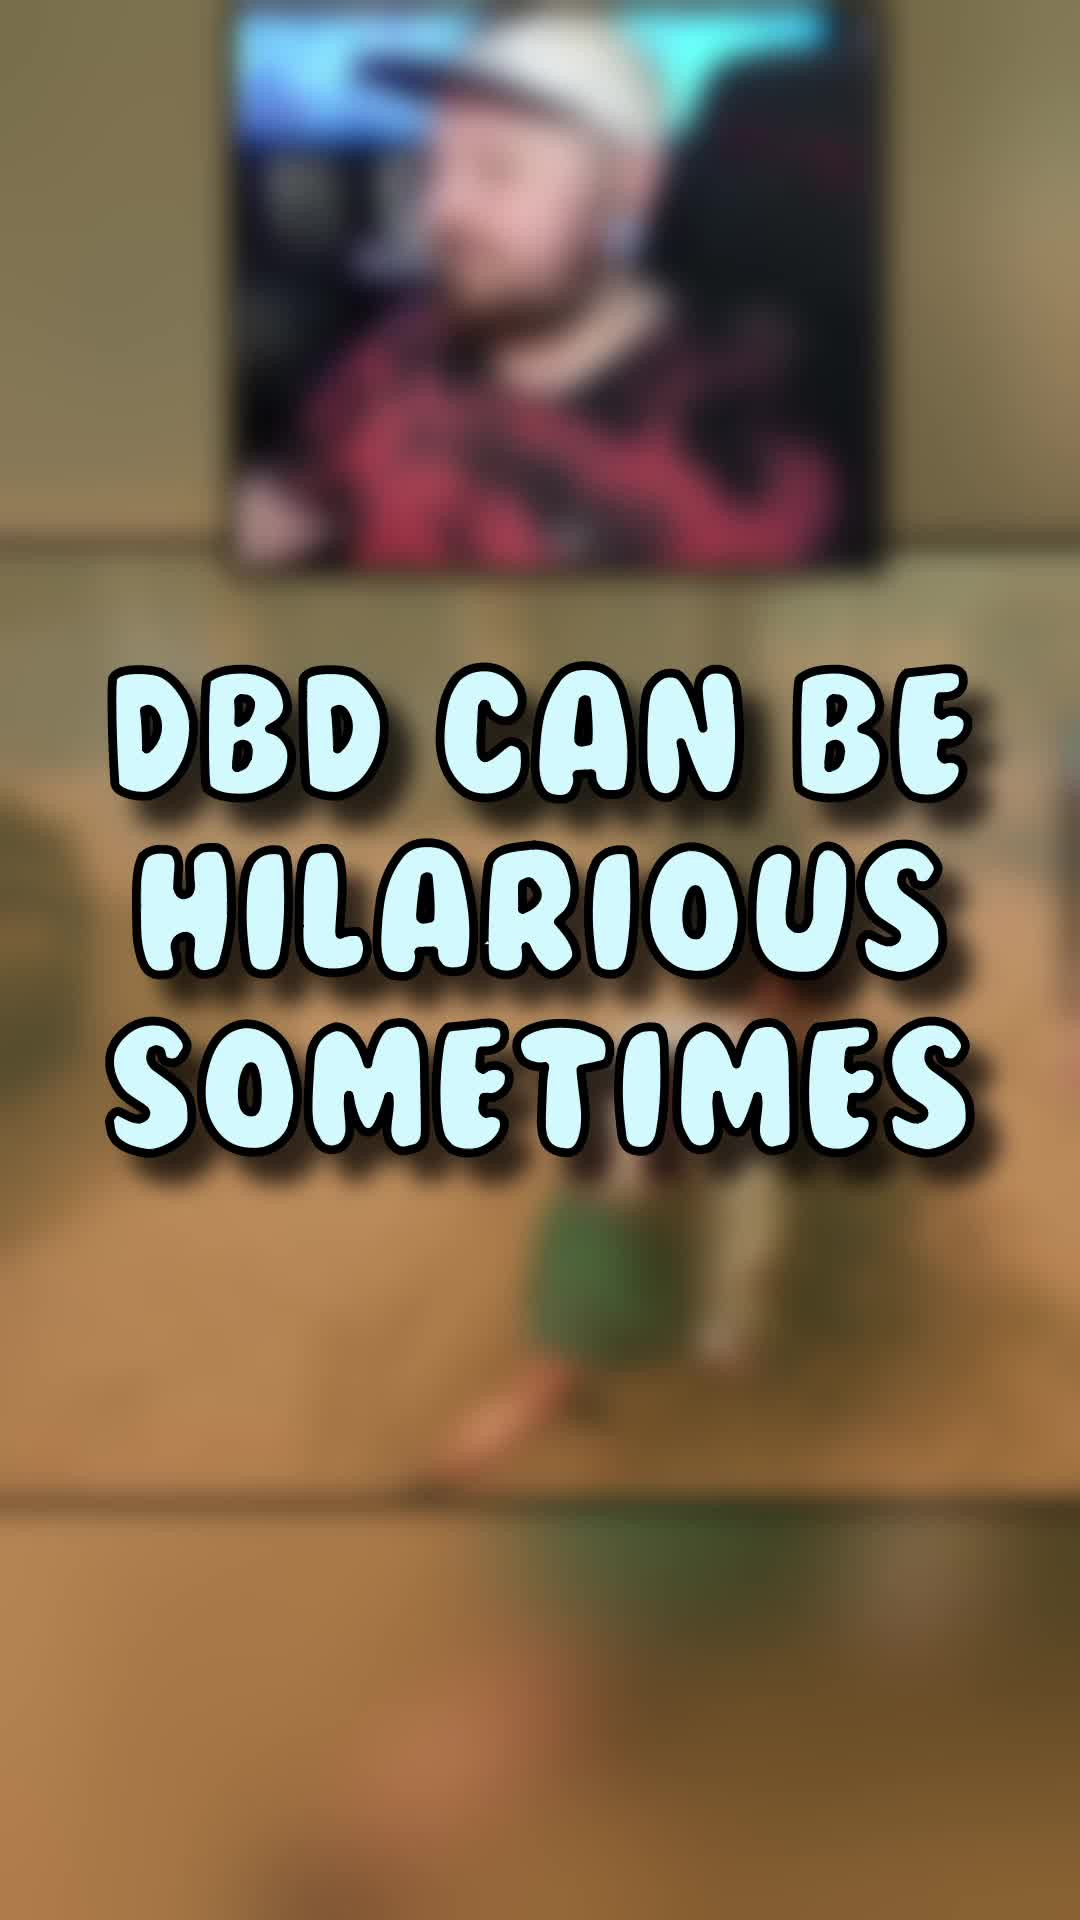 Some hilarious moments from recent streams! #dbd #deadbydaylight #dbdfunny #dbdmemes #dbdstreamer #dbdsurvivor #dbdkiller